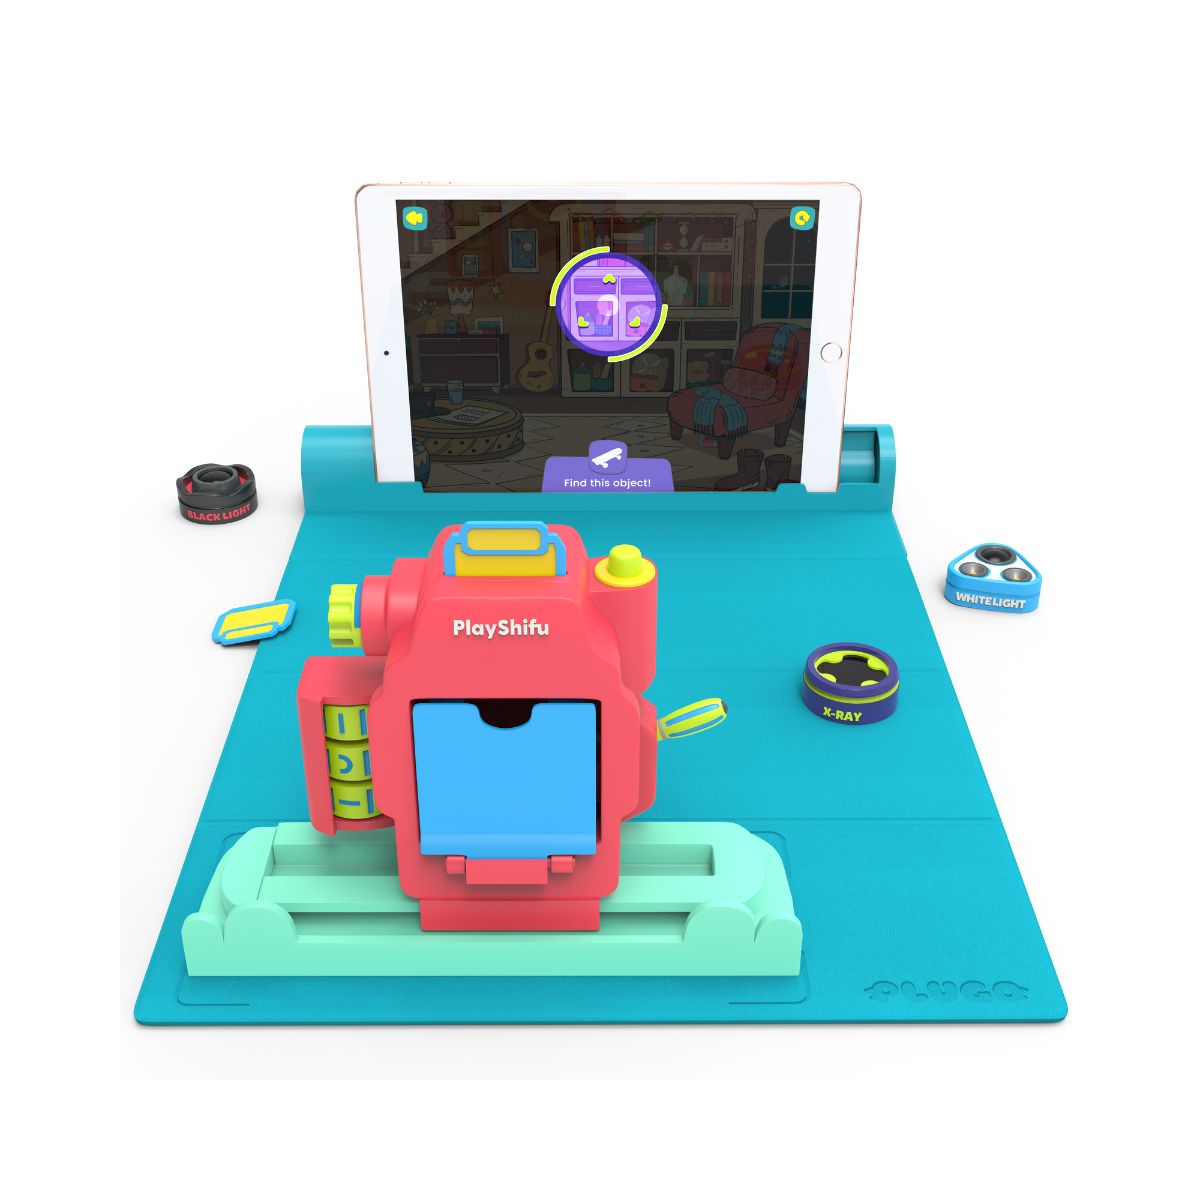 Plugo Detective with Gamepad | PlayShifu - Wake Concept Store  